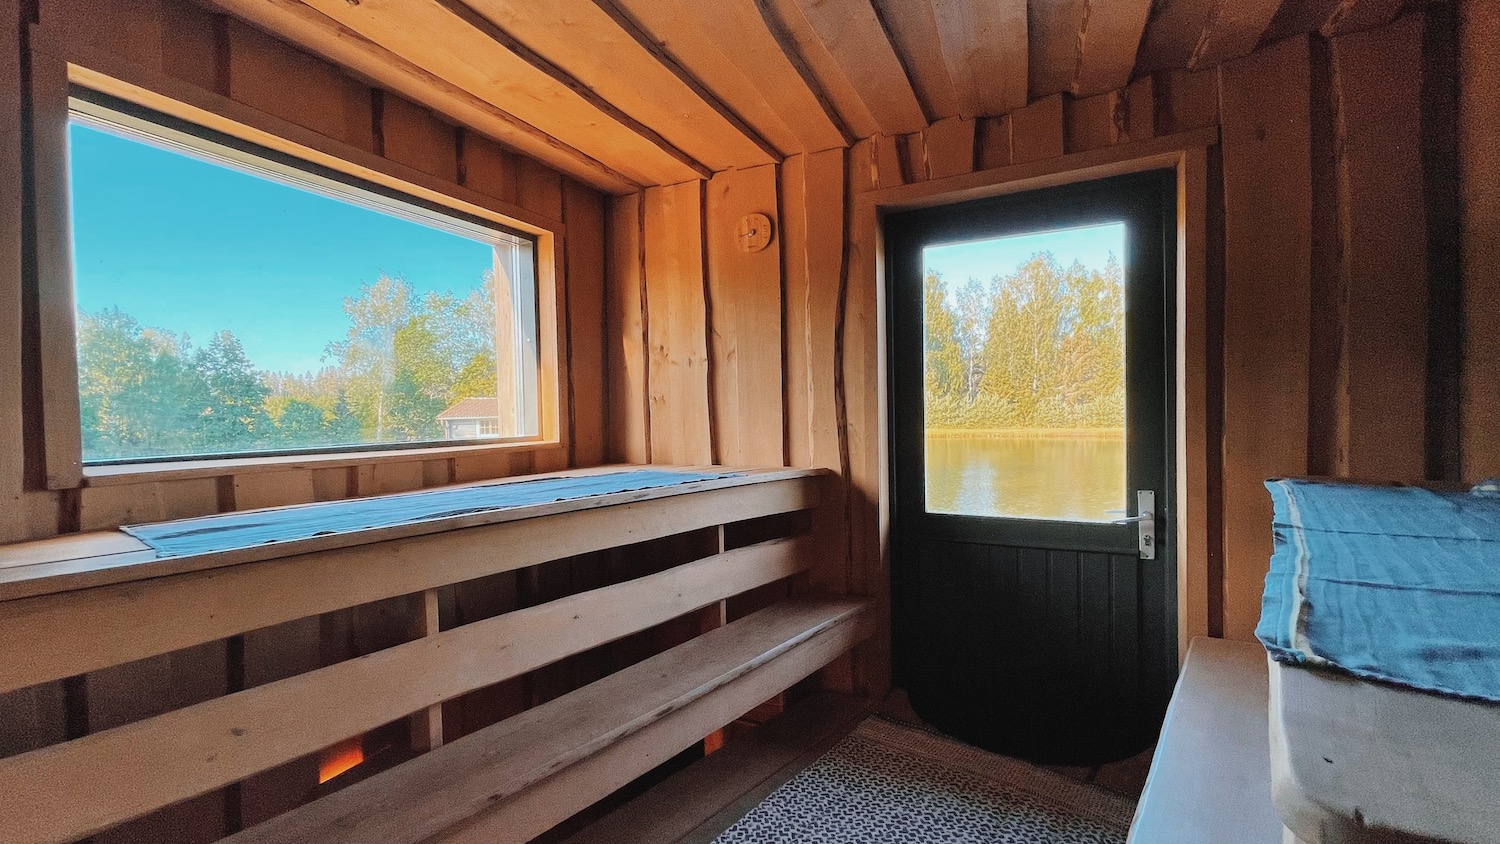 Saimre holiday home near Viljandi with a sauna and scenic view, visit Estonia